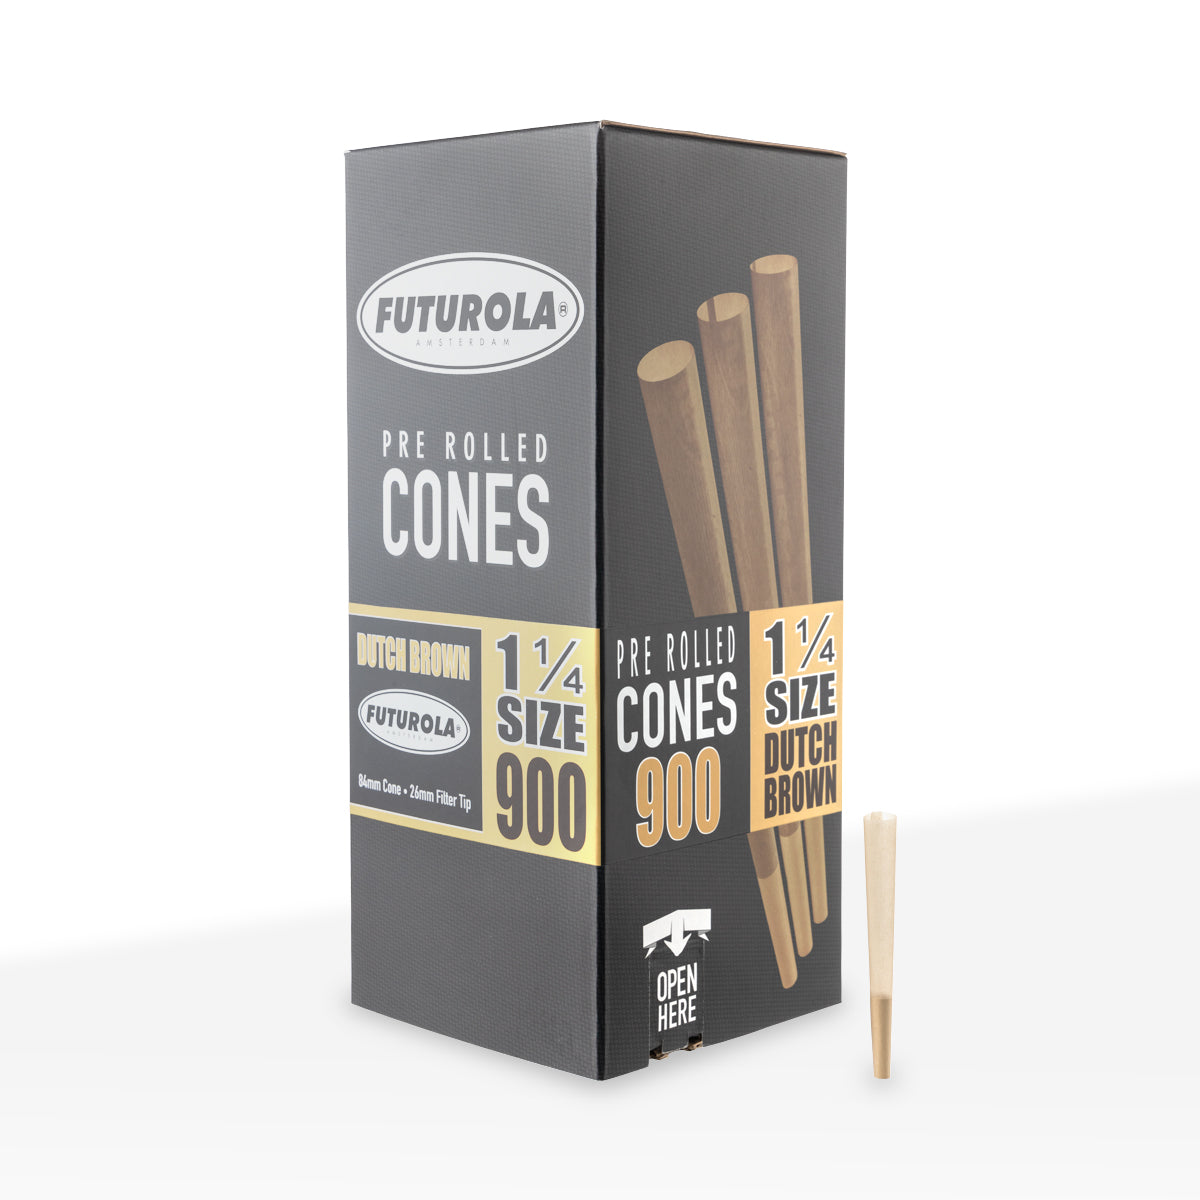 FUTUROLA® | Pre-Rolled Cones 1¼ Size | 84mm - Dutch Brown - 900 Count